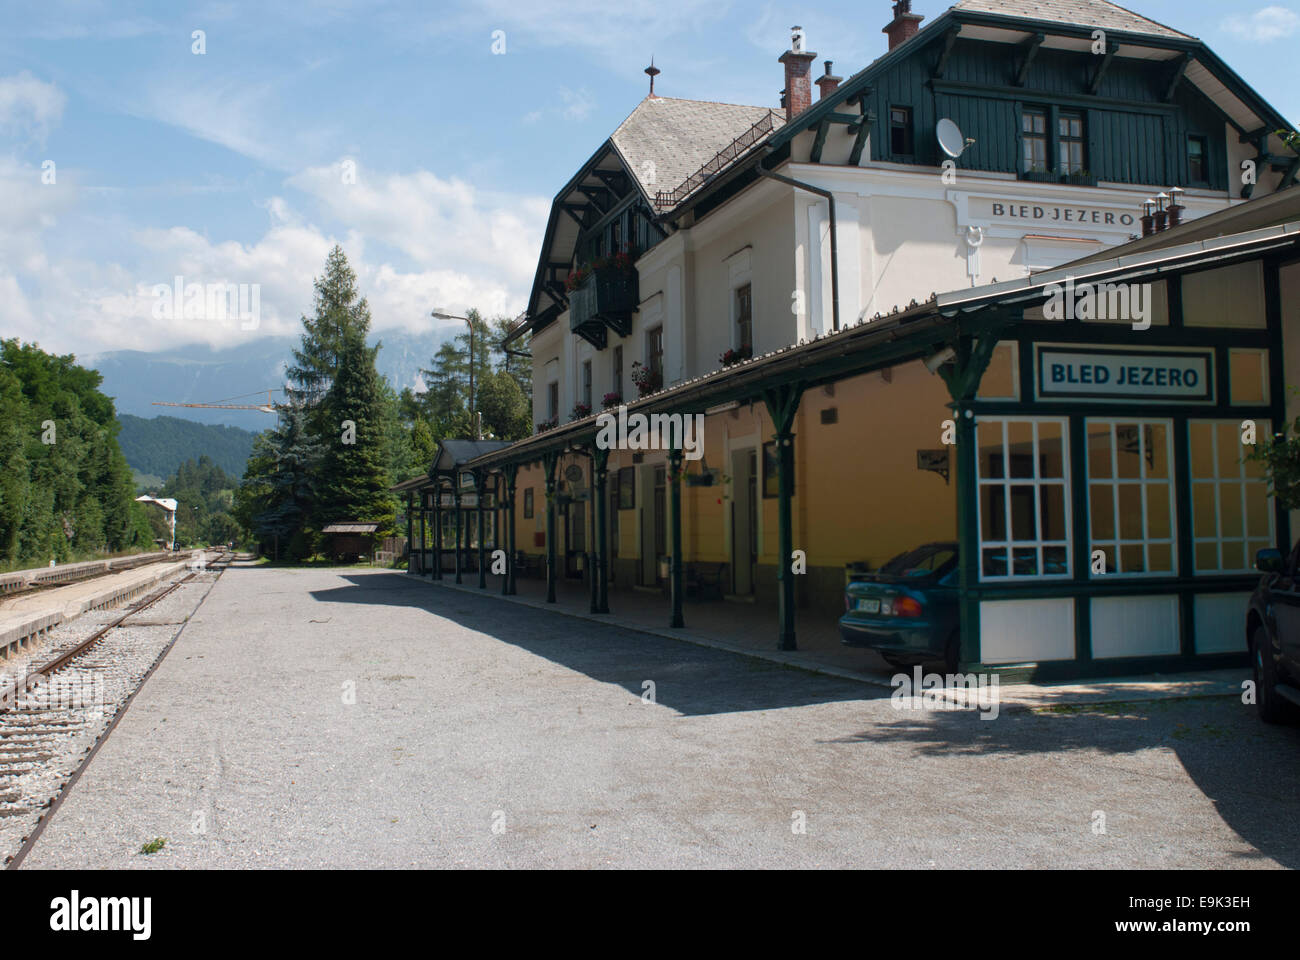 Bled Jezero railway station, Bled, Slovenia Stock Photo - Alamy